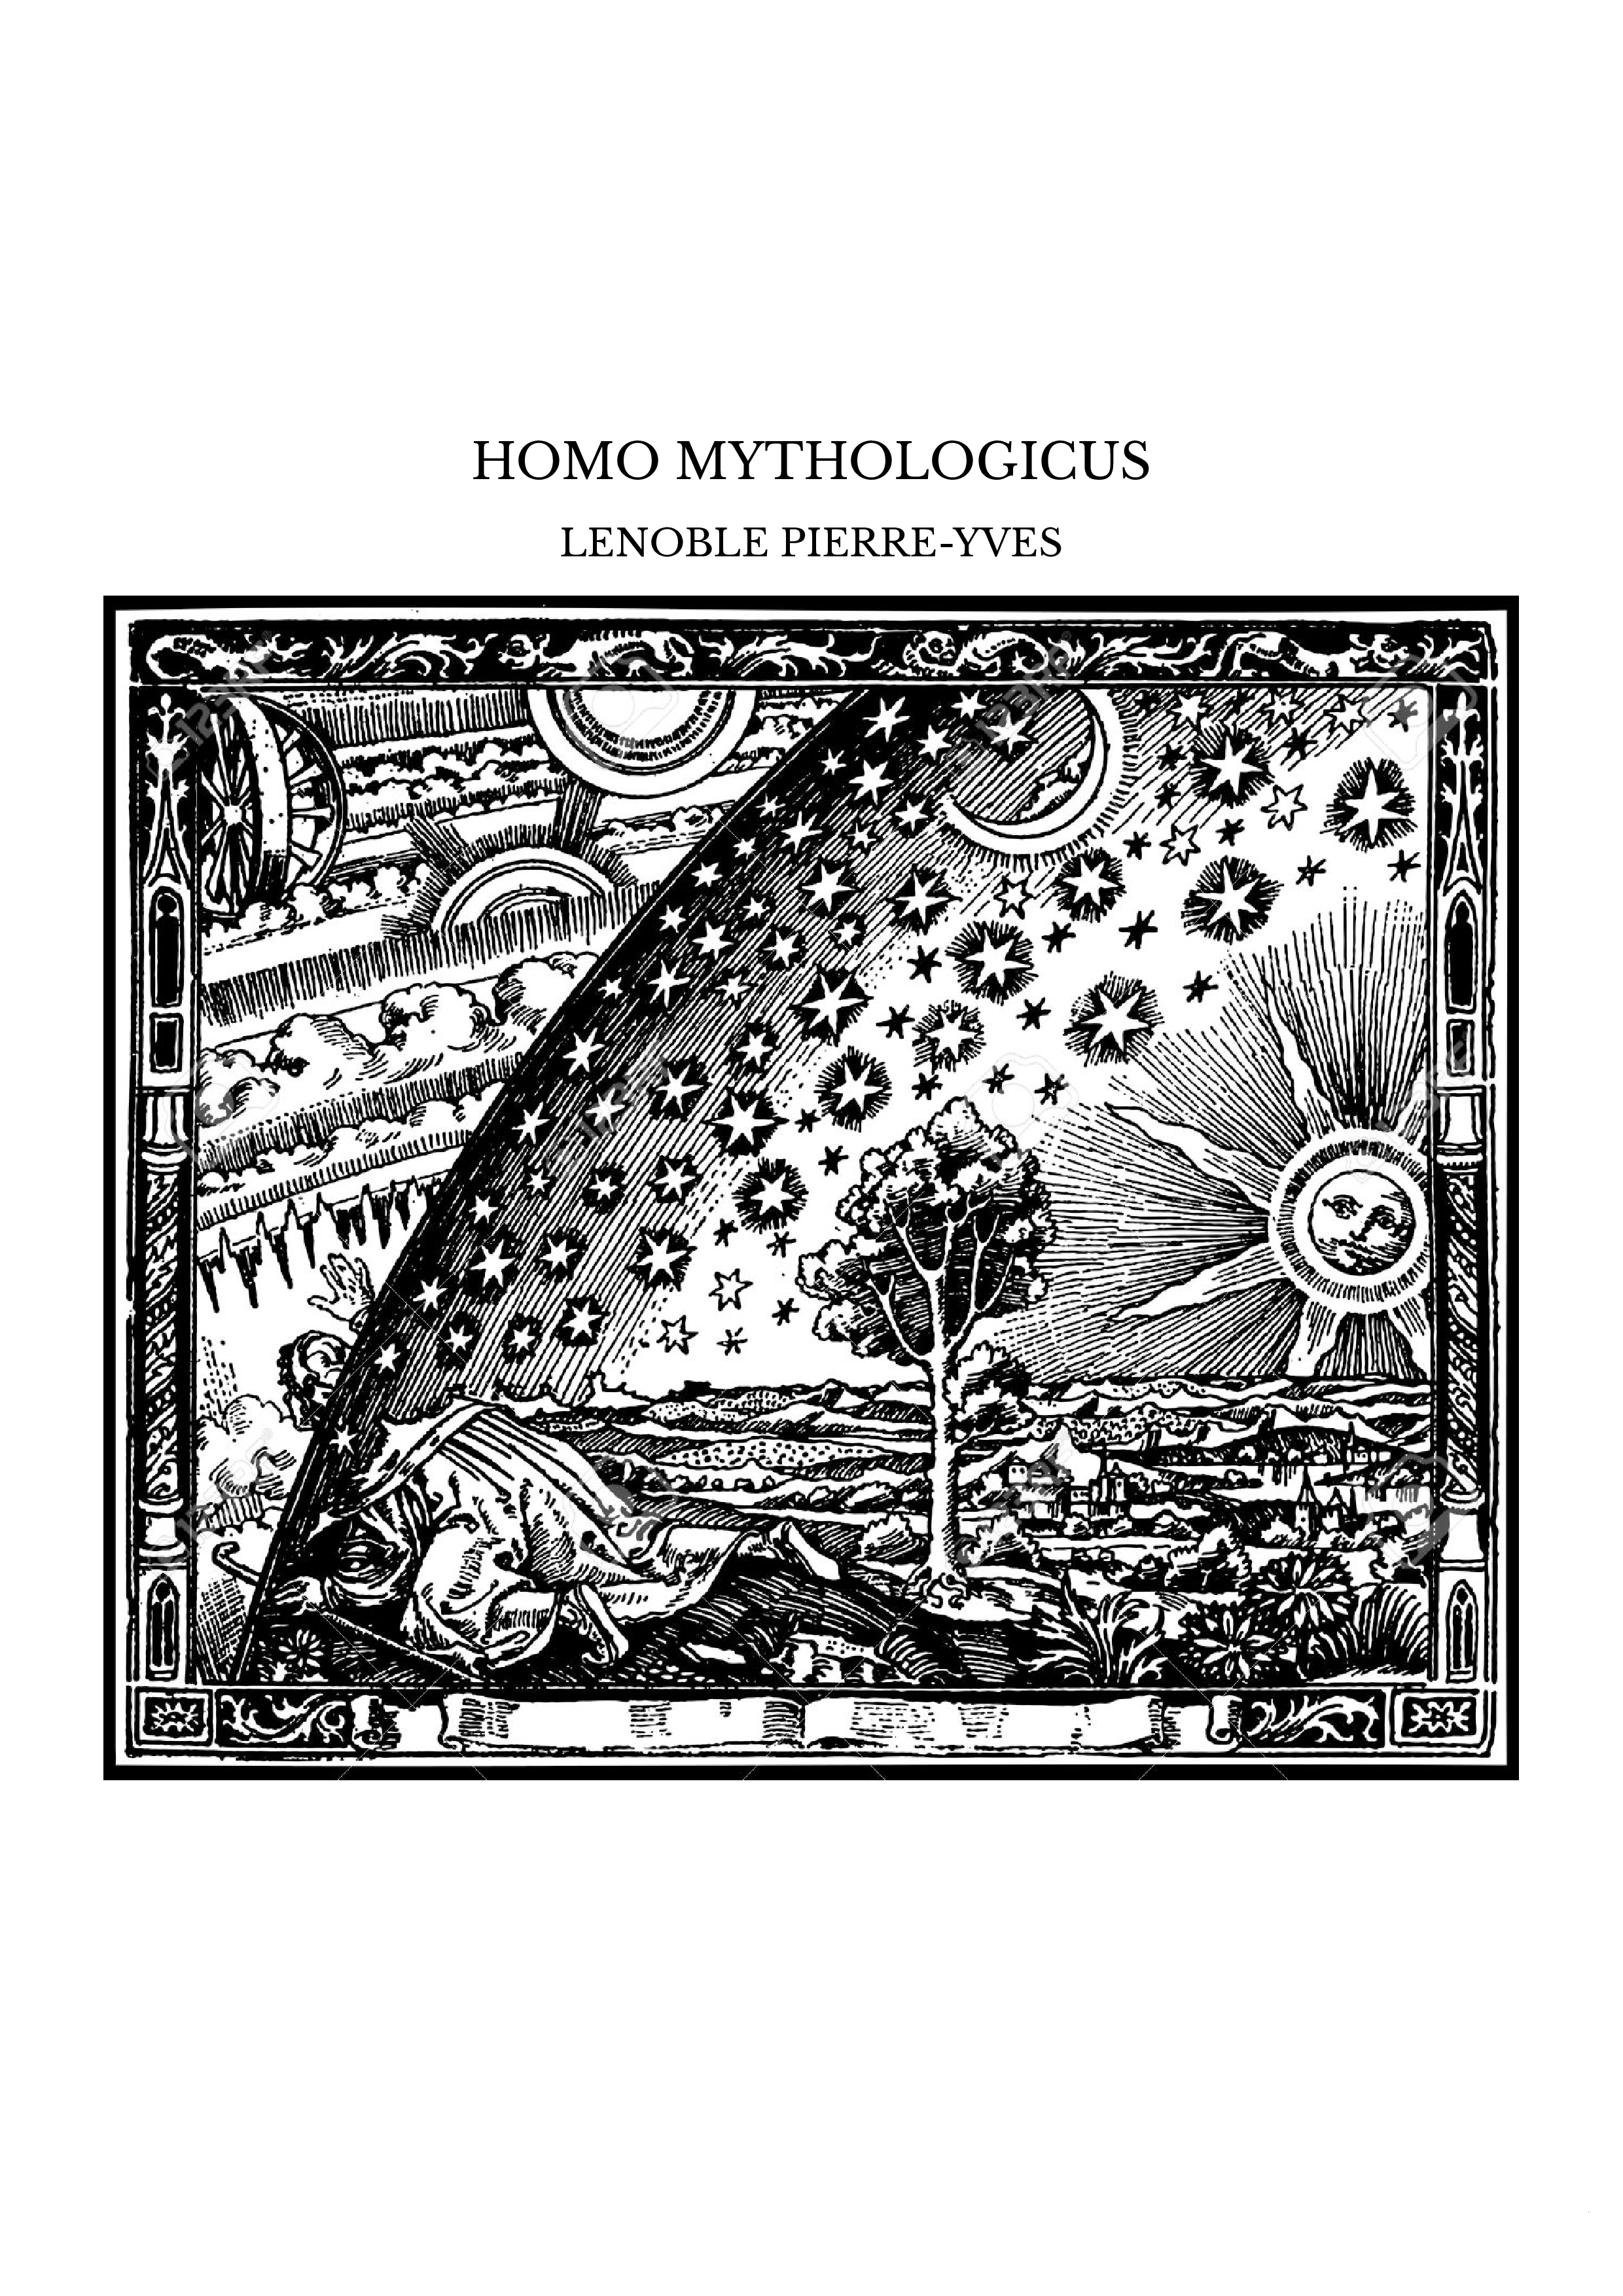 HOMO MYTHOLOGICUS